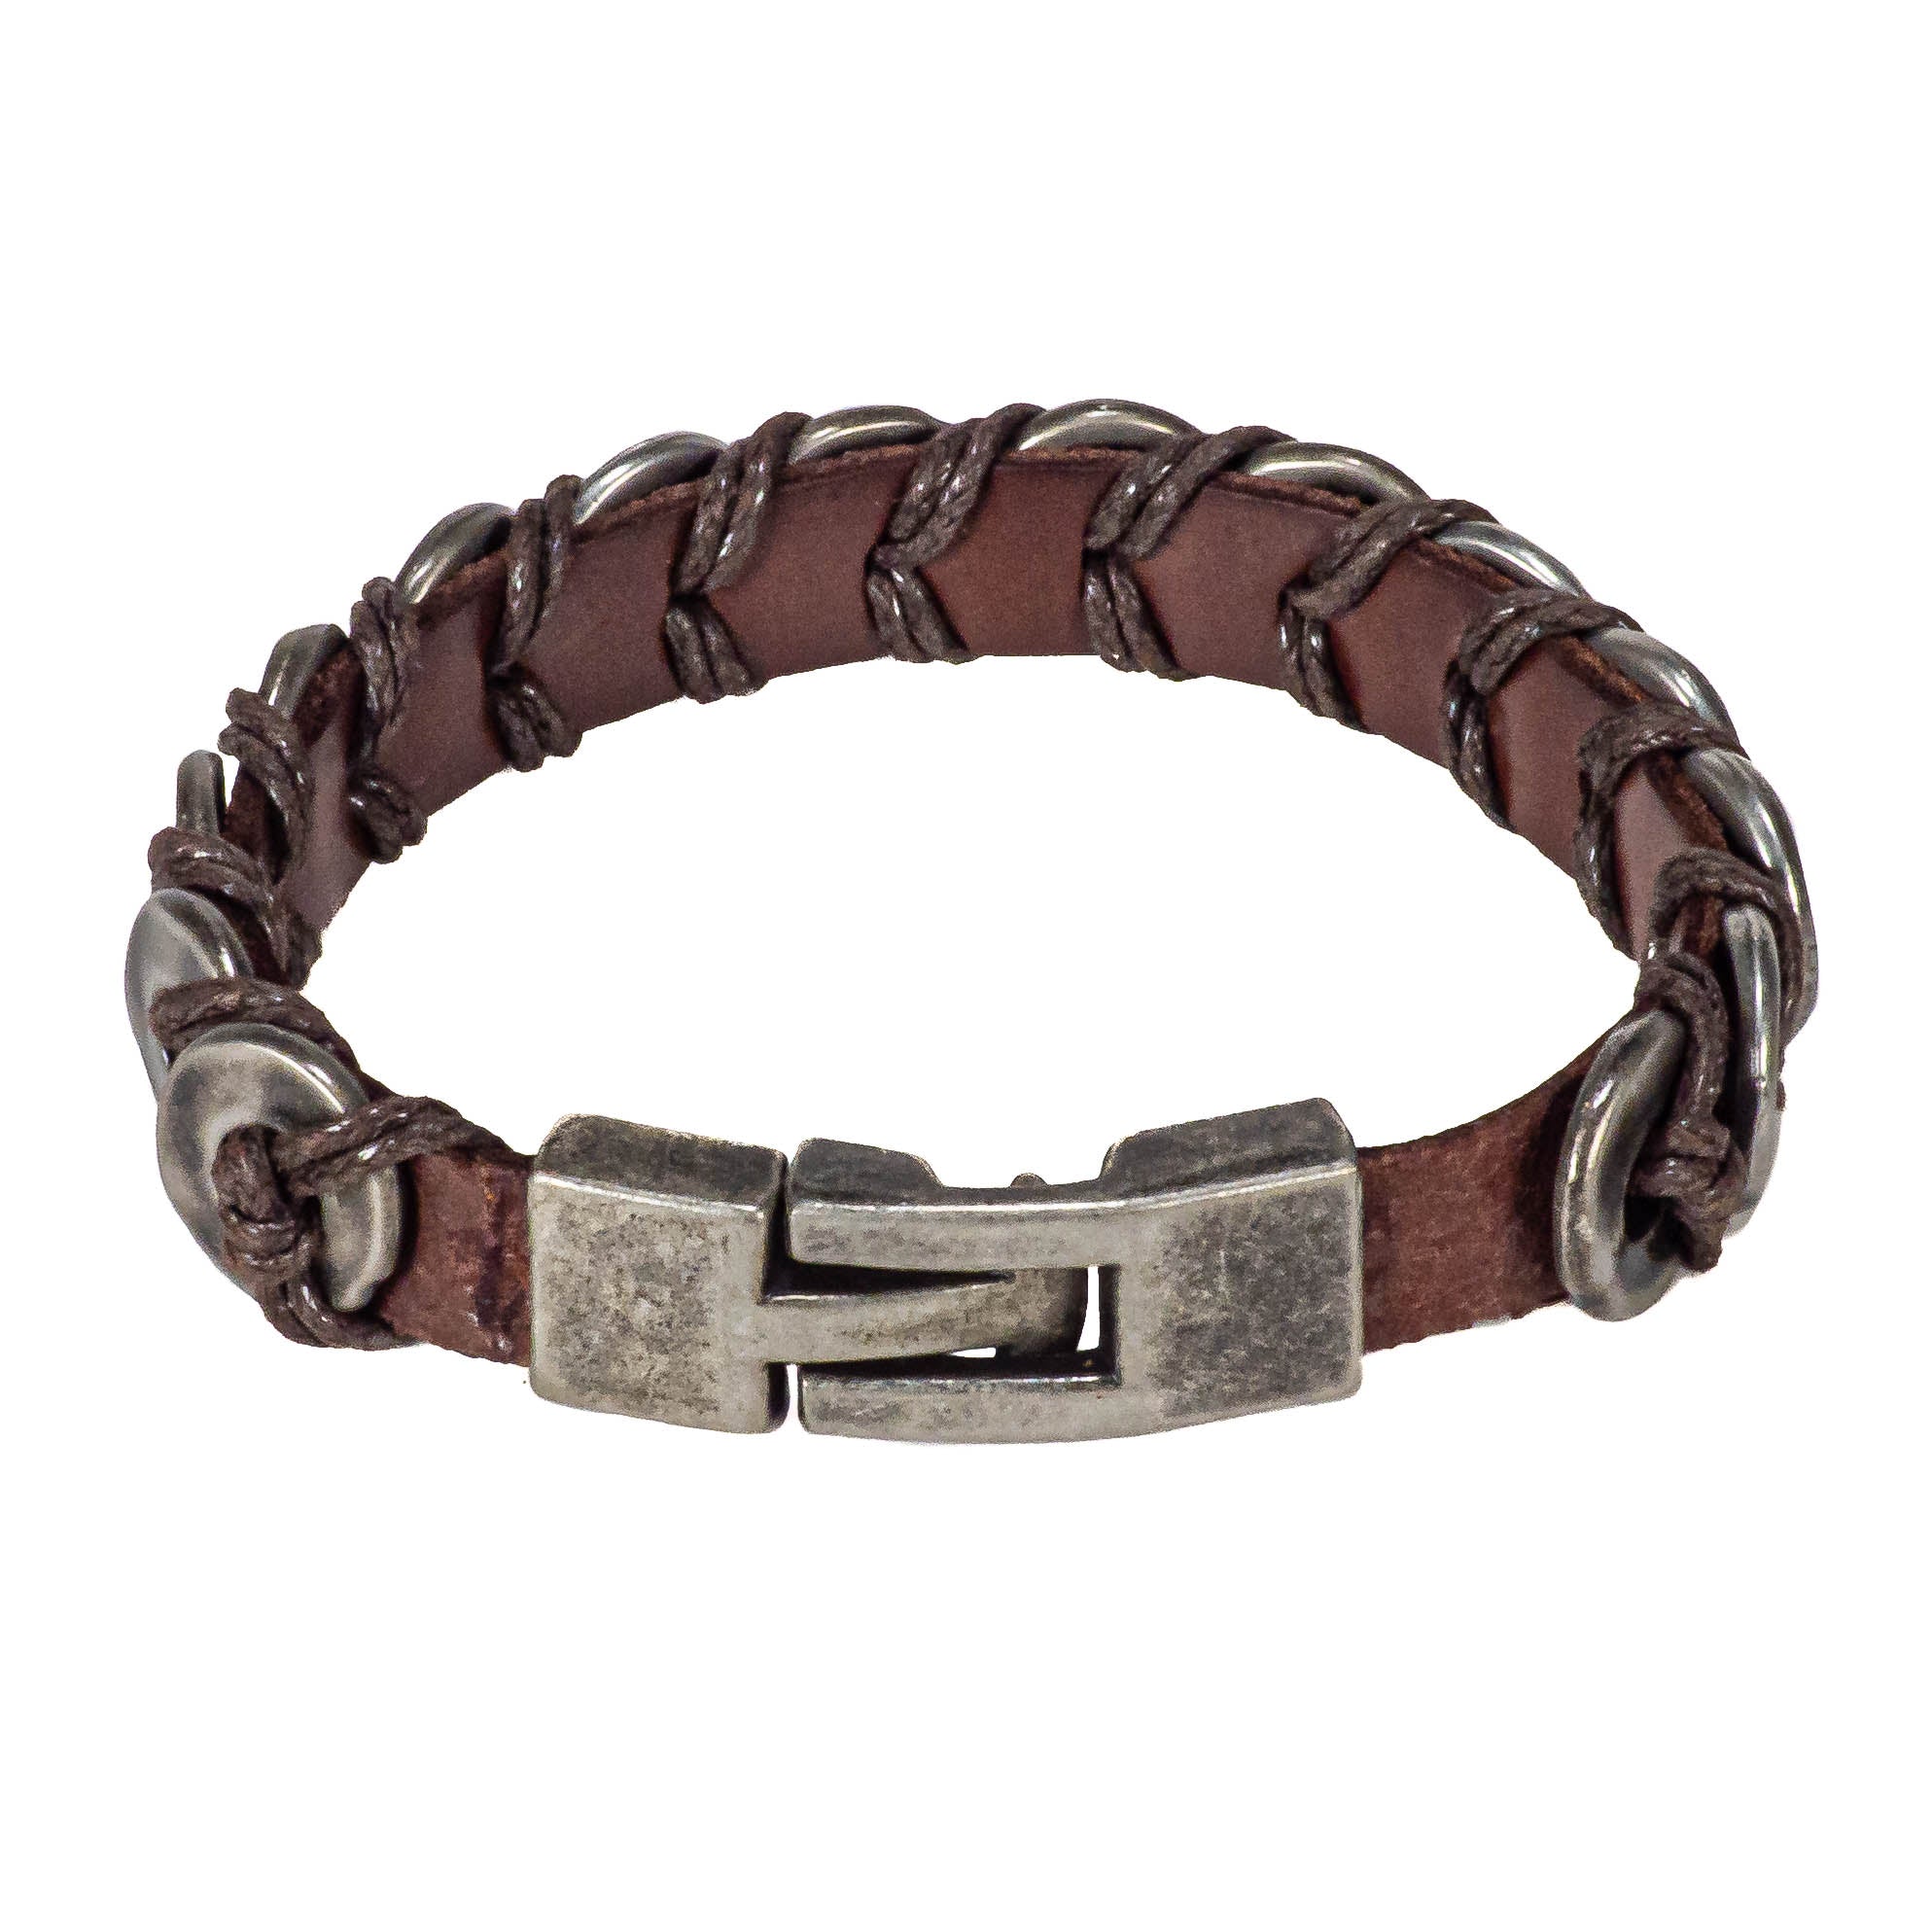 Dark Brown Leather Bracelet with Antique Silver Discs Design